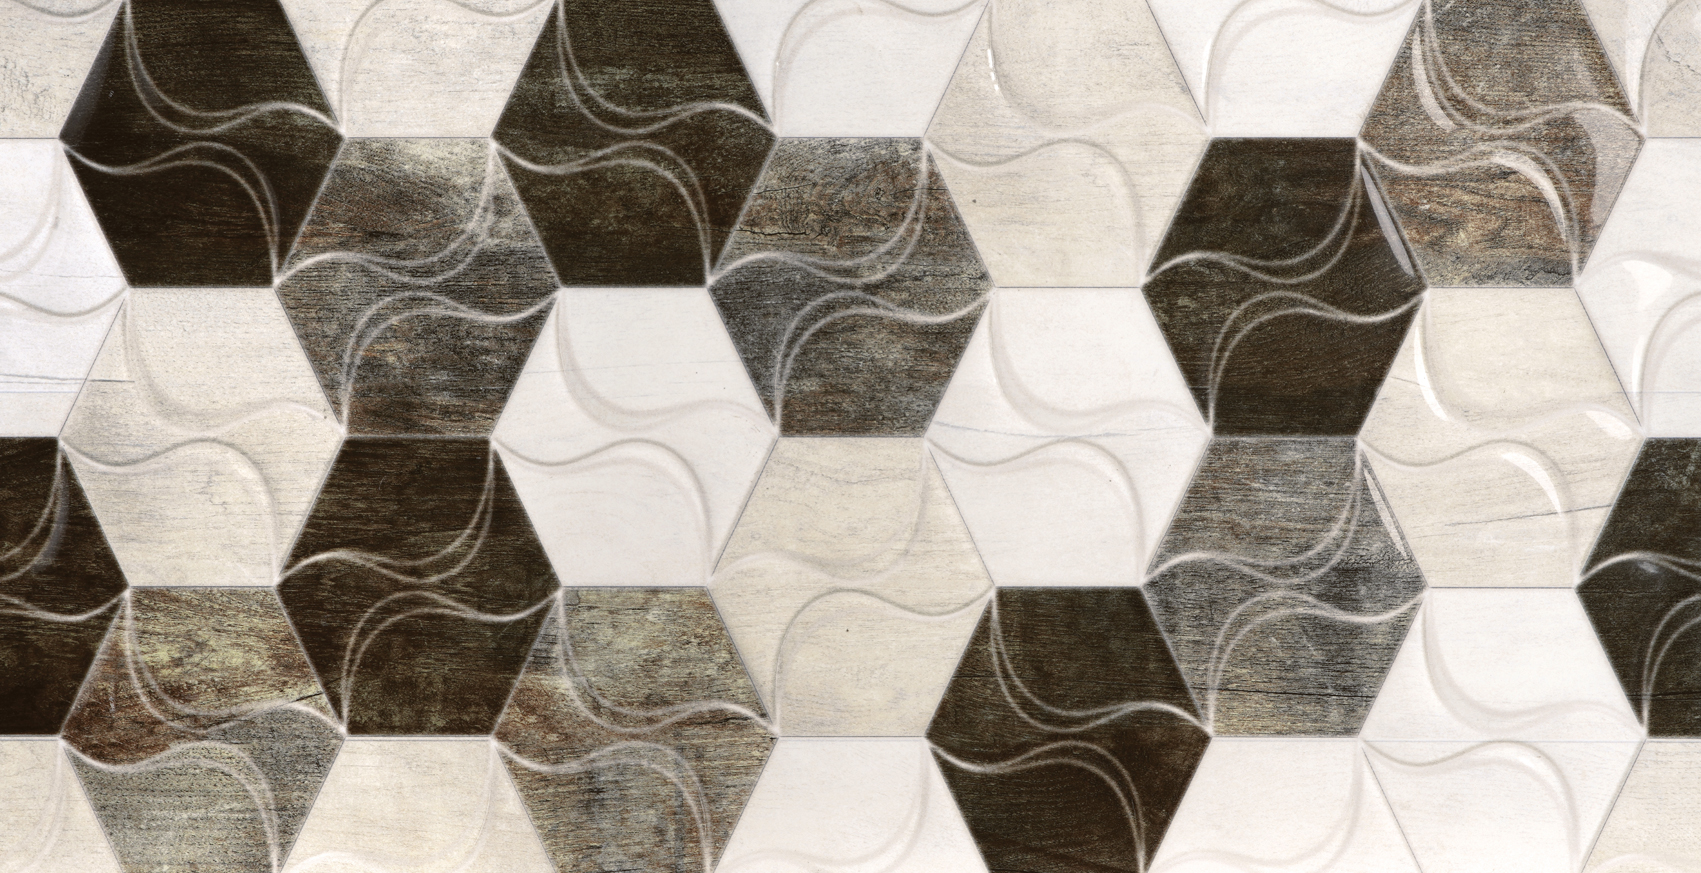 Hexagonal Tiles for Bathroom Tiles, Kitchen Tiles, Accent Tiles